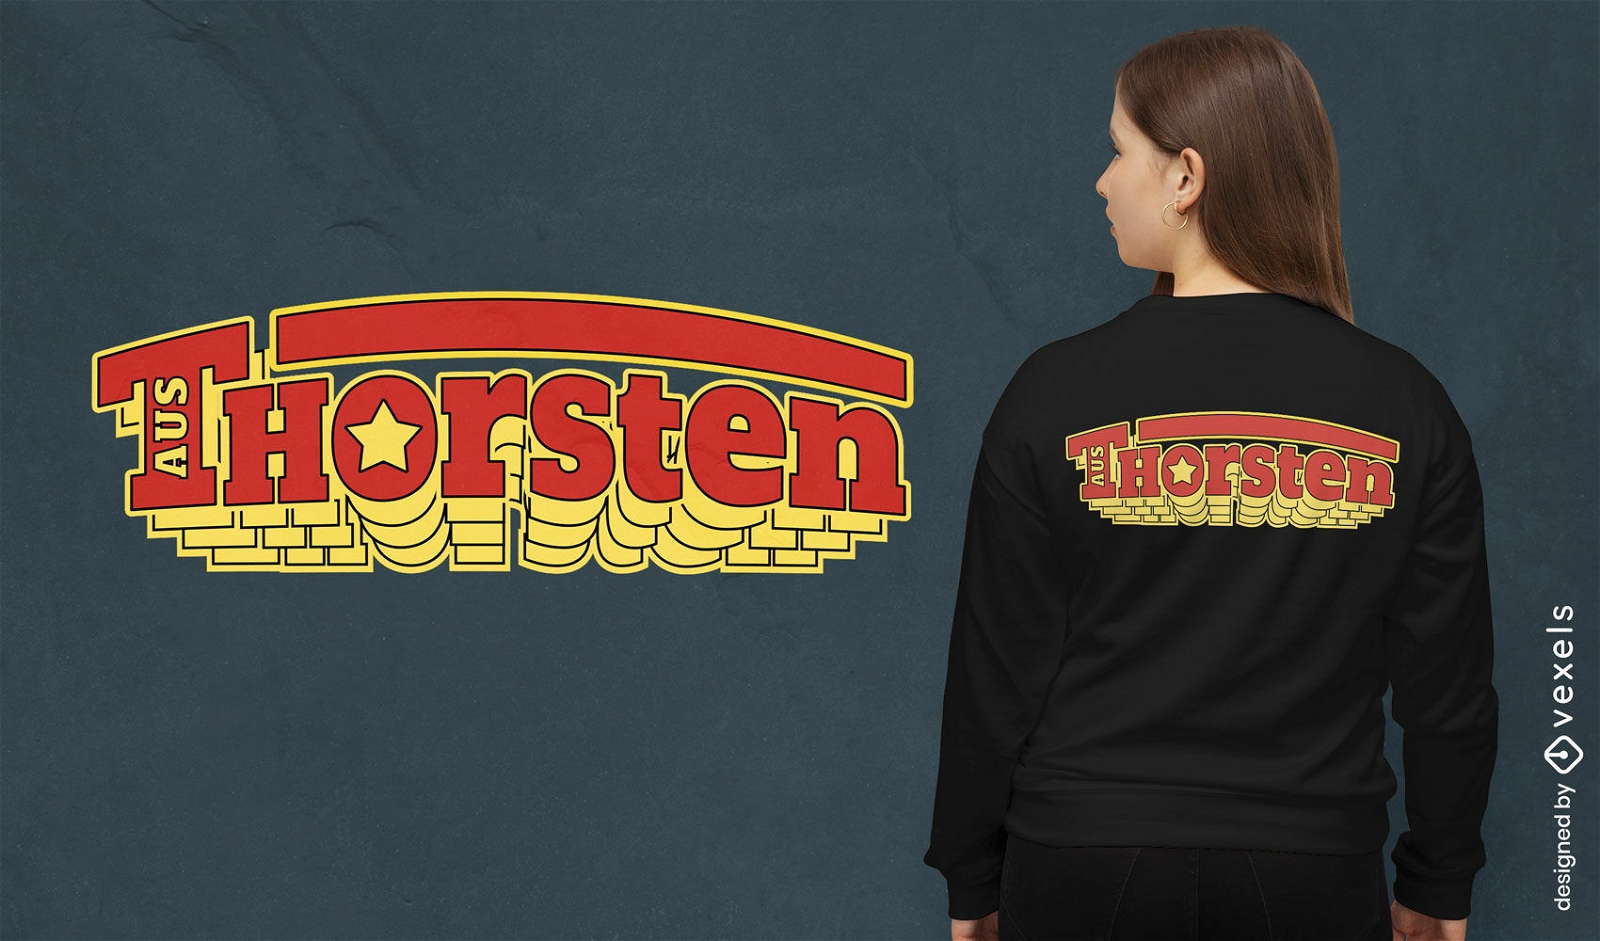 Superhelden-deutsches Zitat-T-Shirt-Design